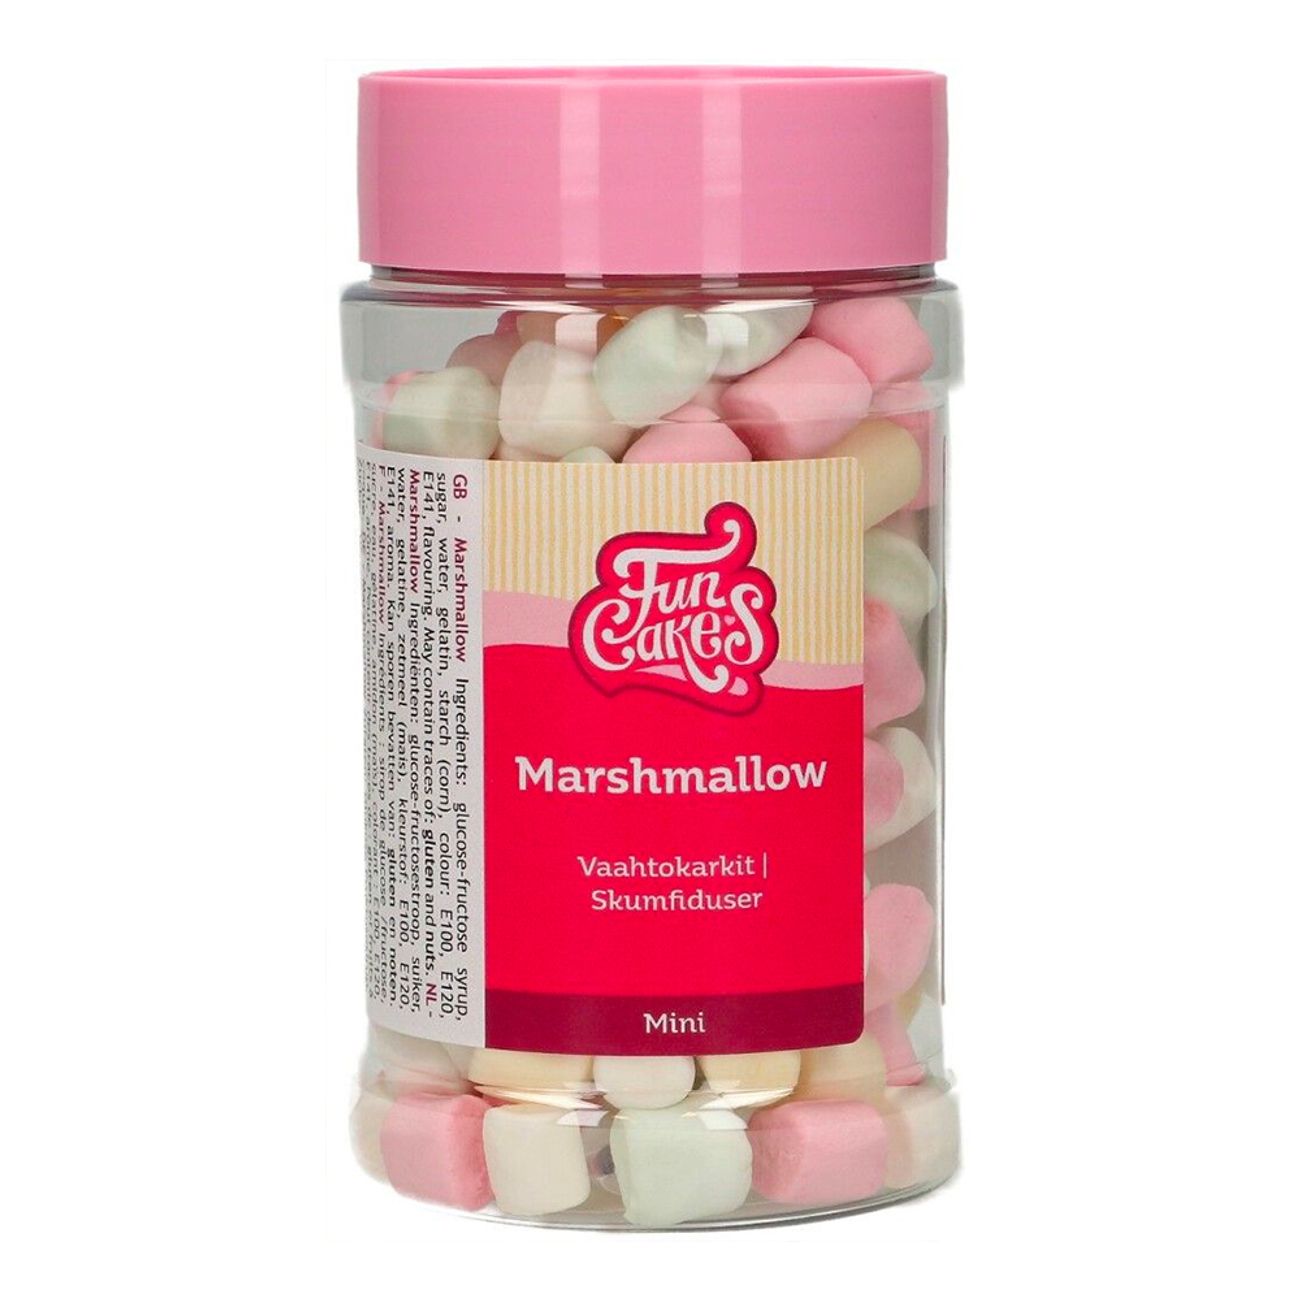 funcakes-strossel-marshmallow-86719-1